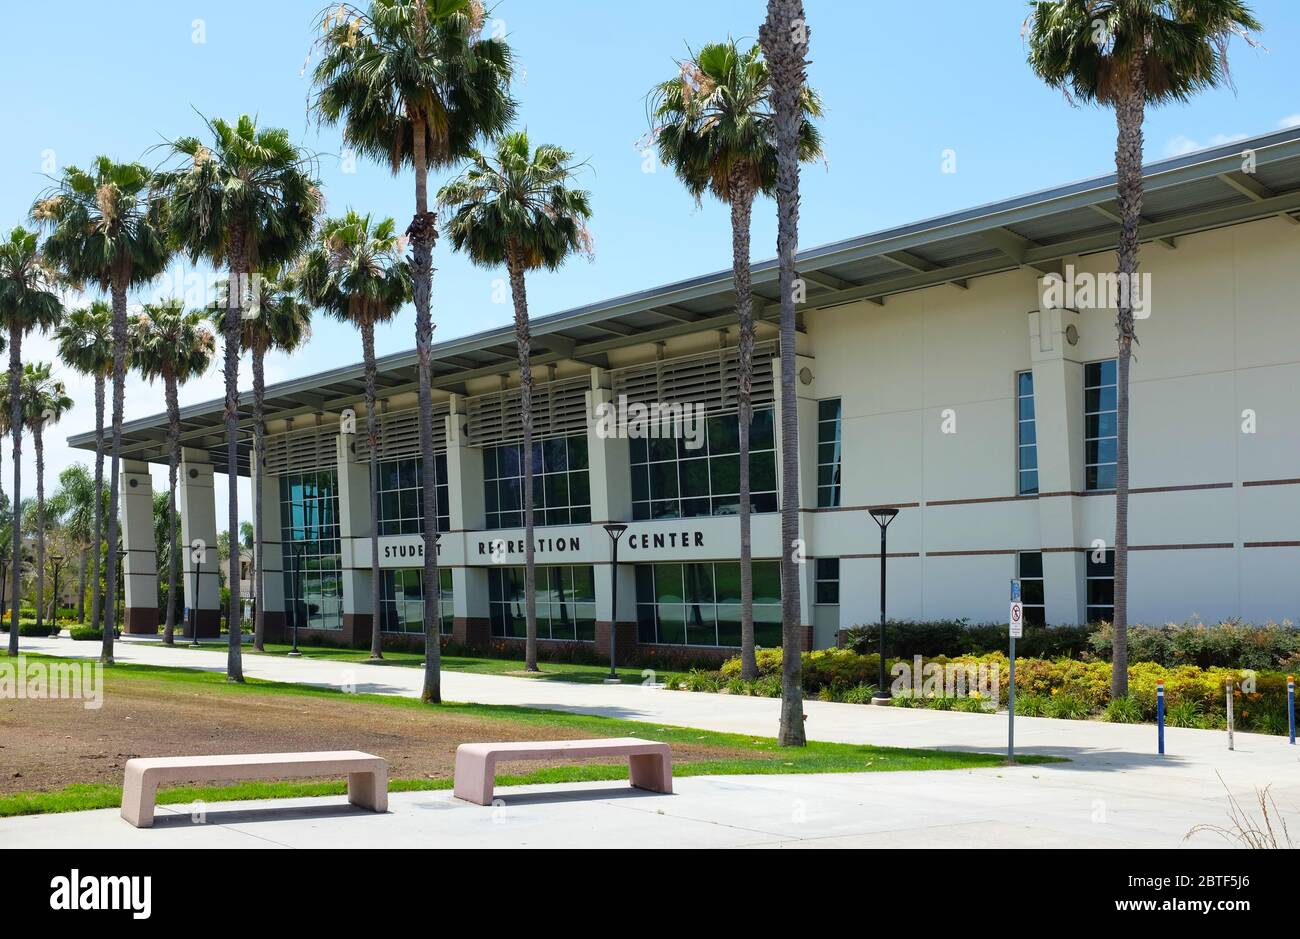 FULLERTON CALIFORNIA - 23. MAI 2020: Student Recreation Center auf dem Campus der California State University Fullerton, CSUF. Die Anlage hat alles Stockfoto